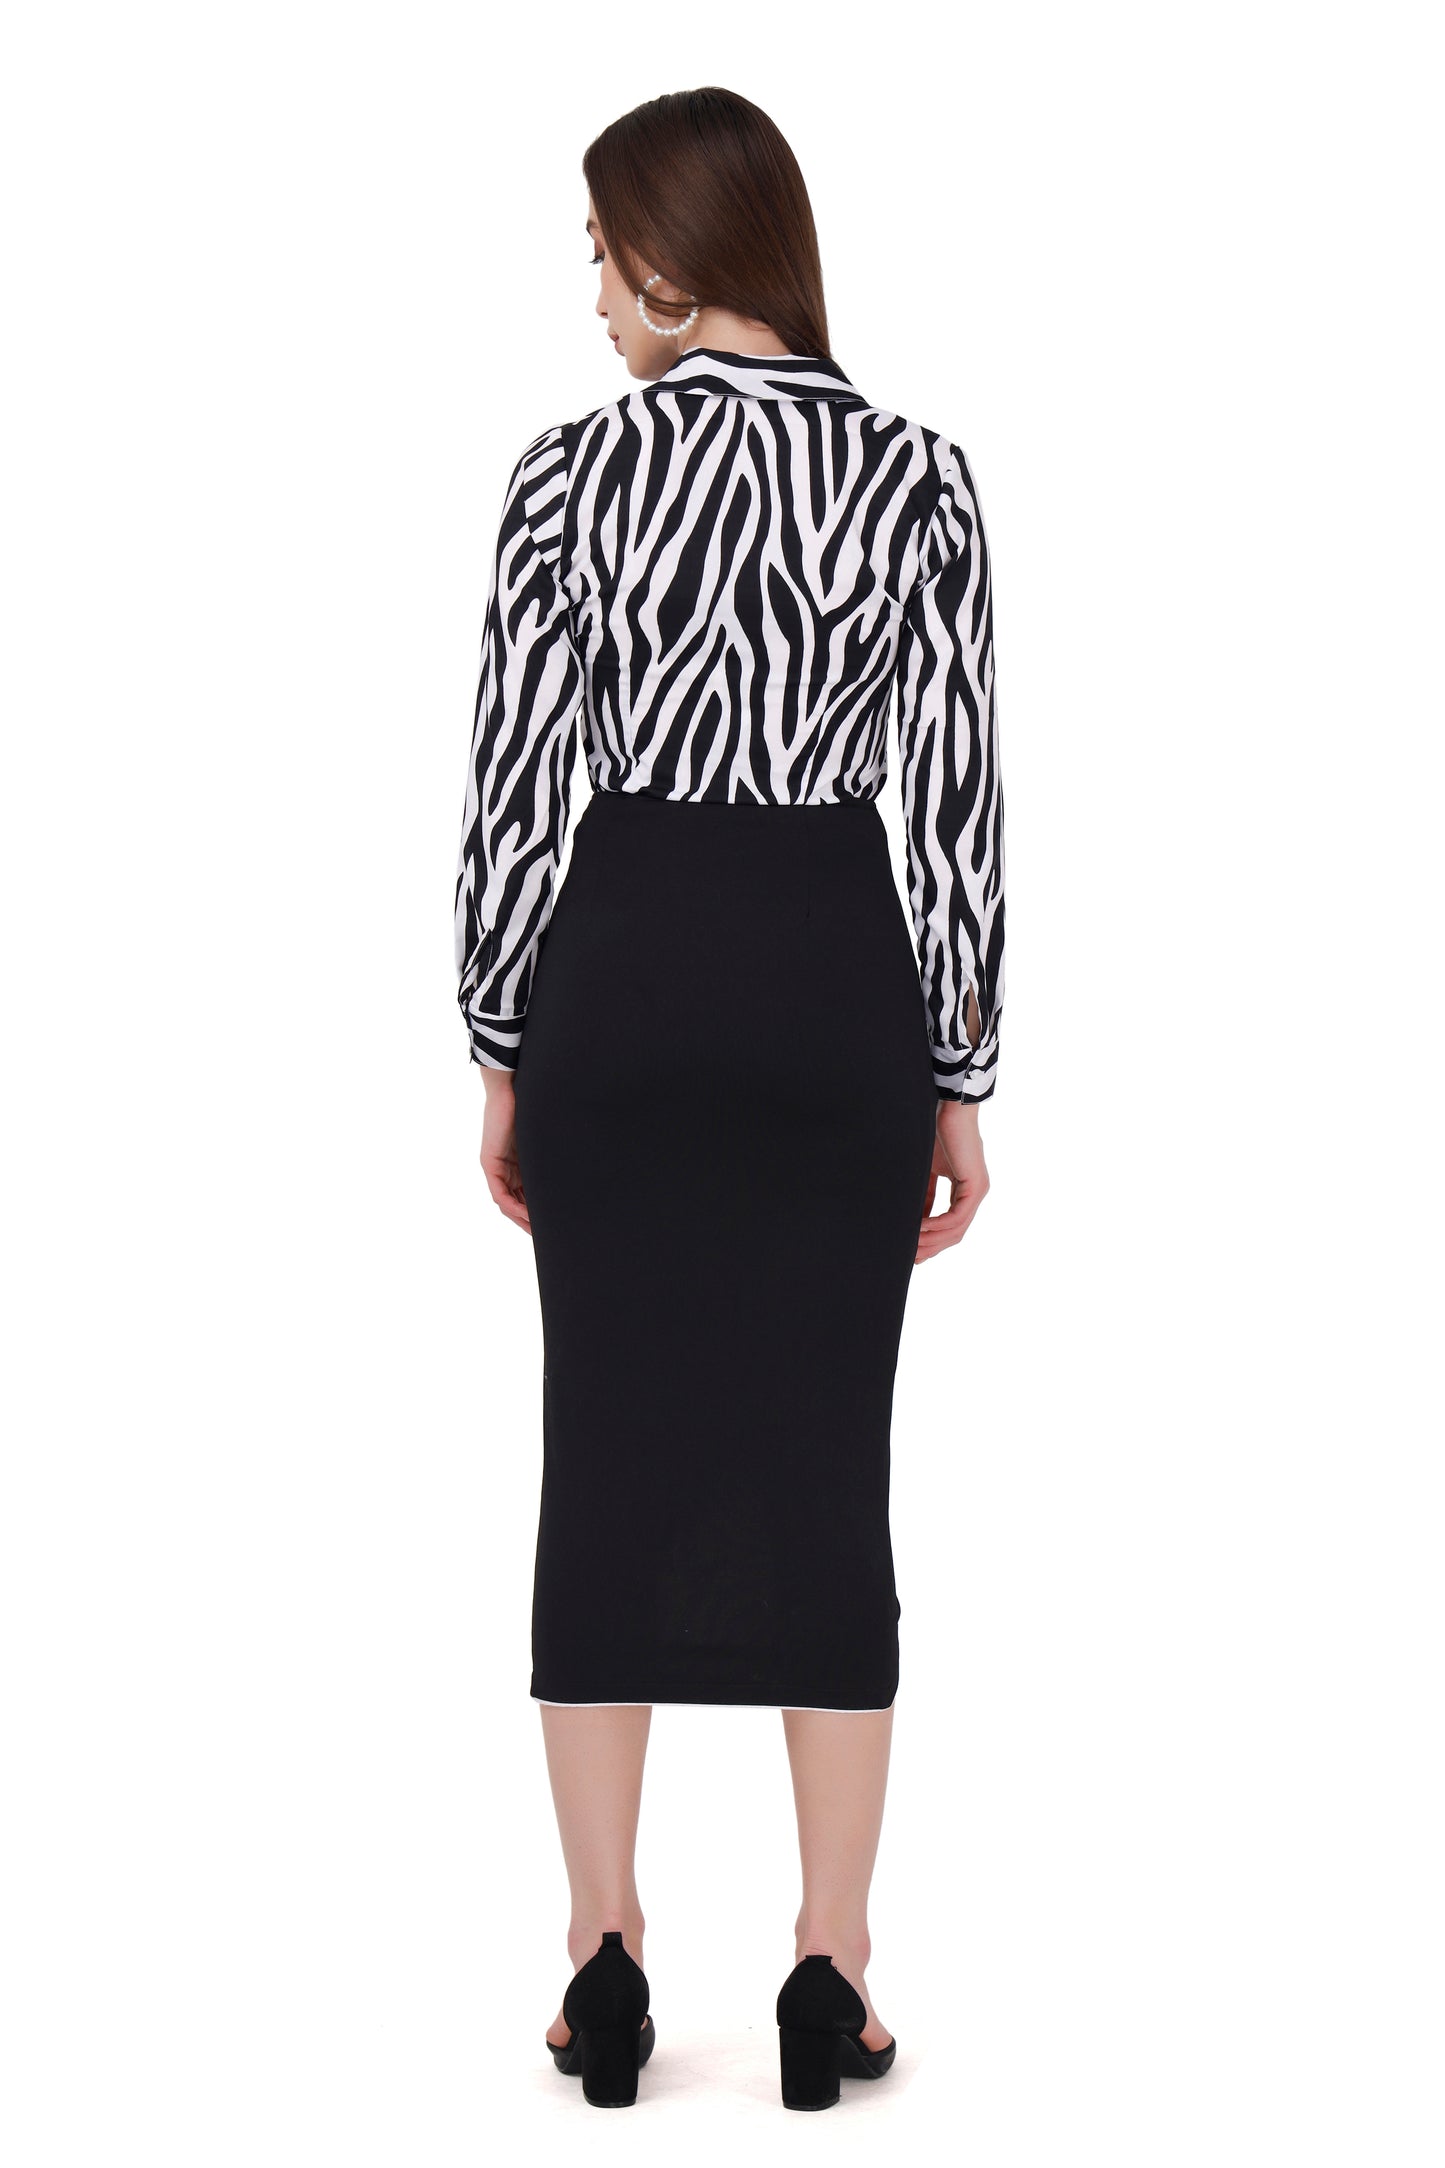 Zebra print shirt and skirt set